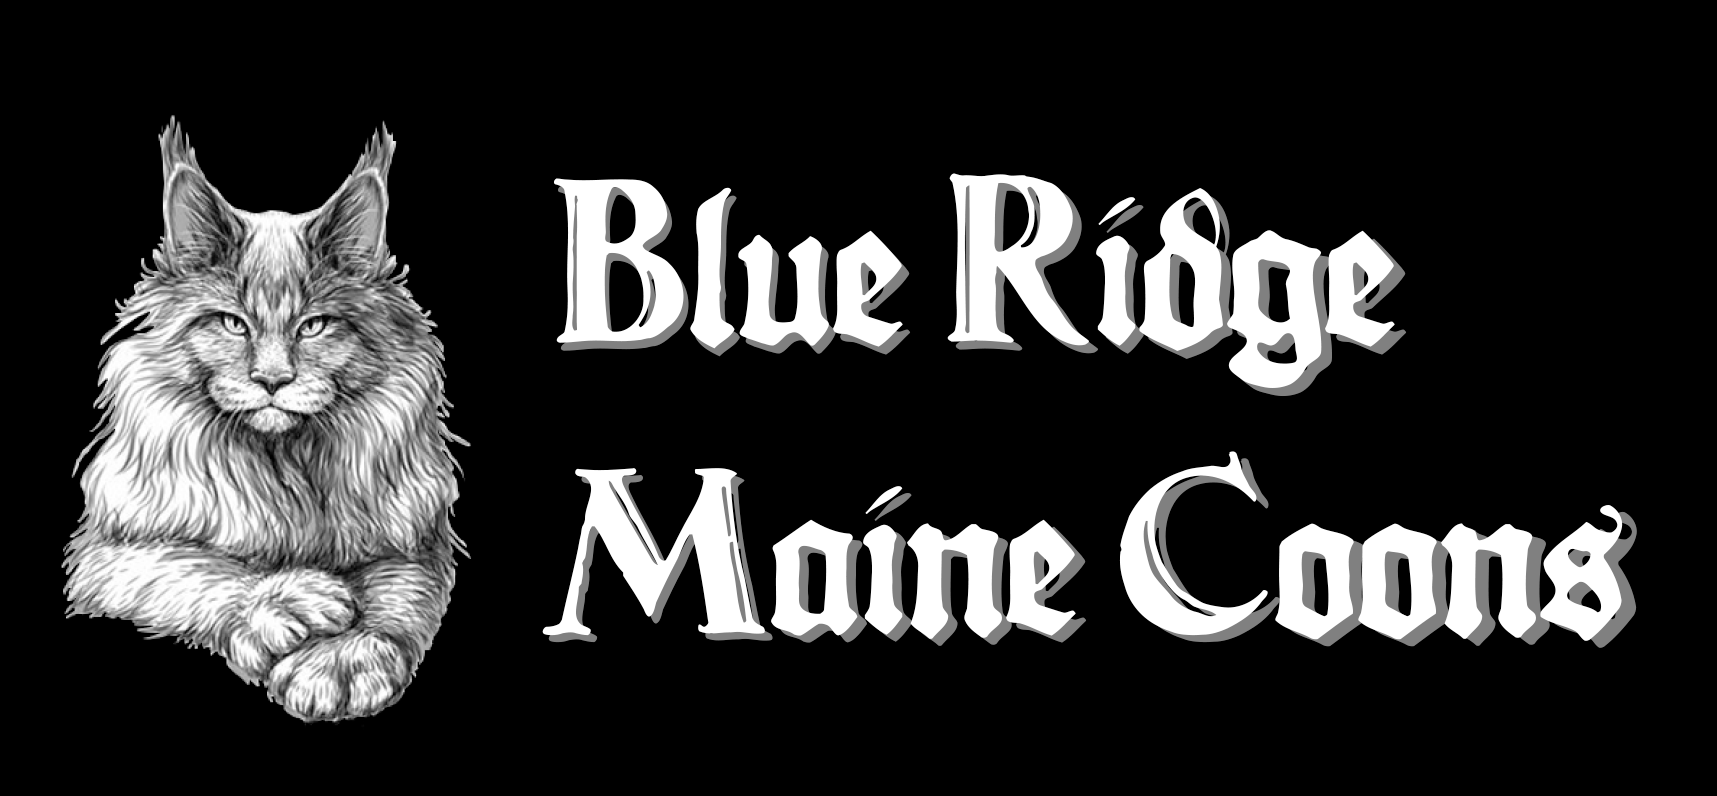 Blue Ridge Maine Coons